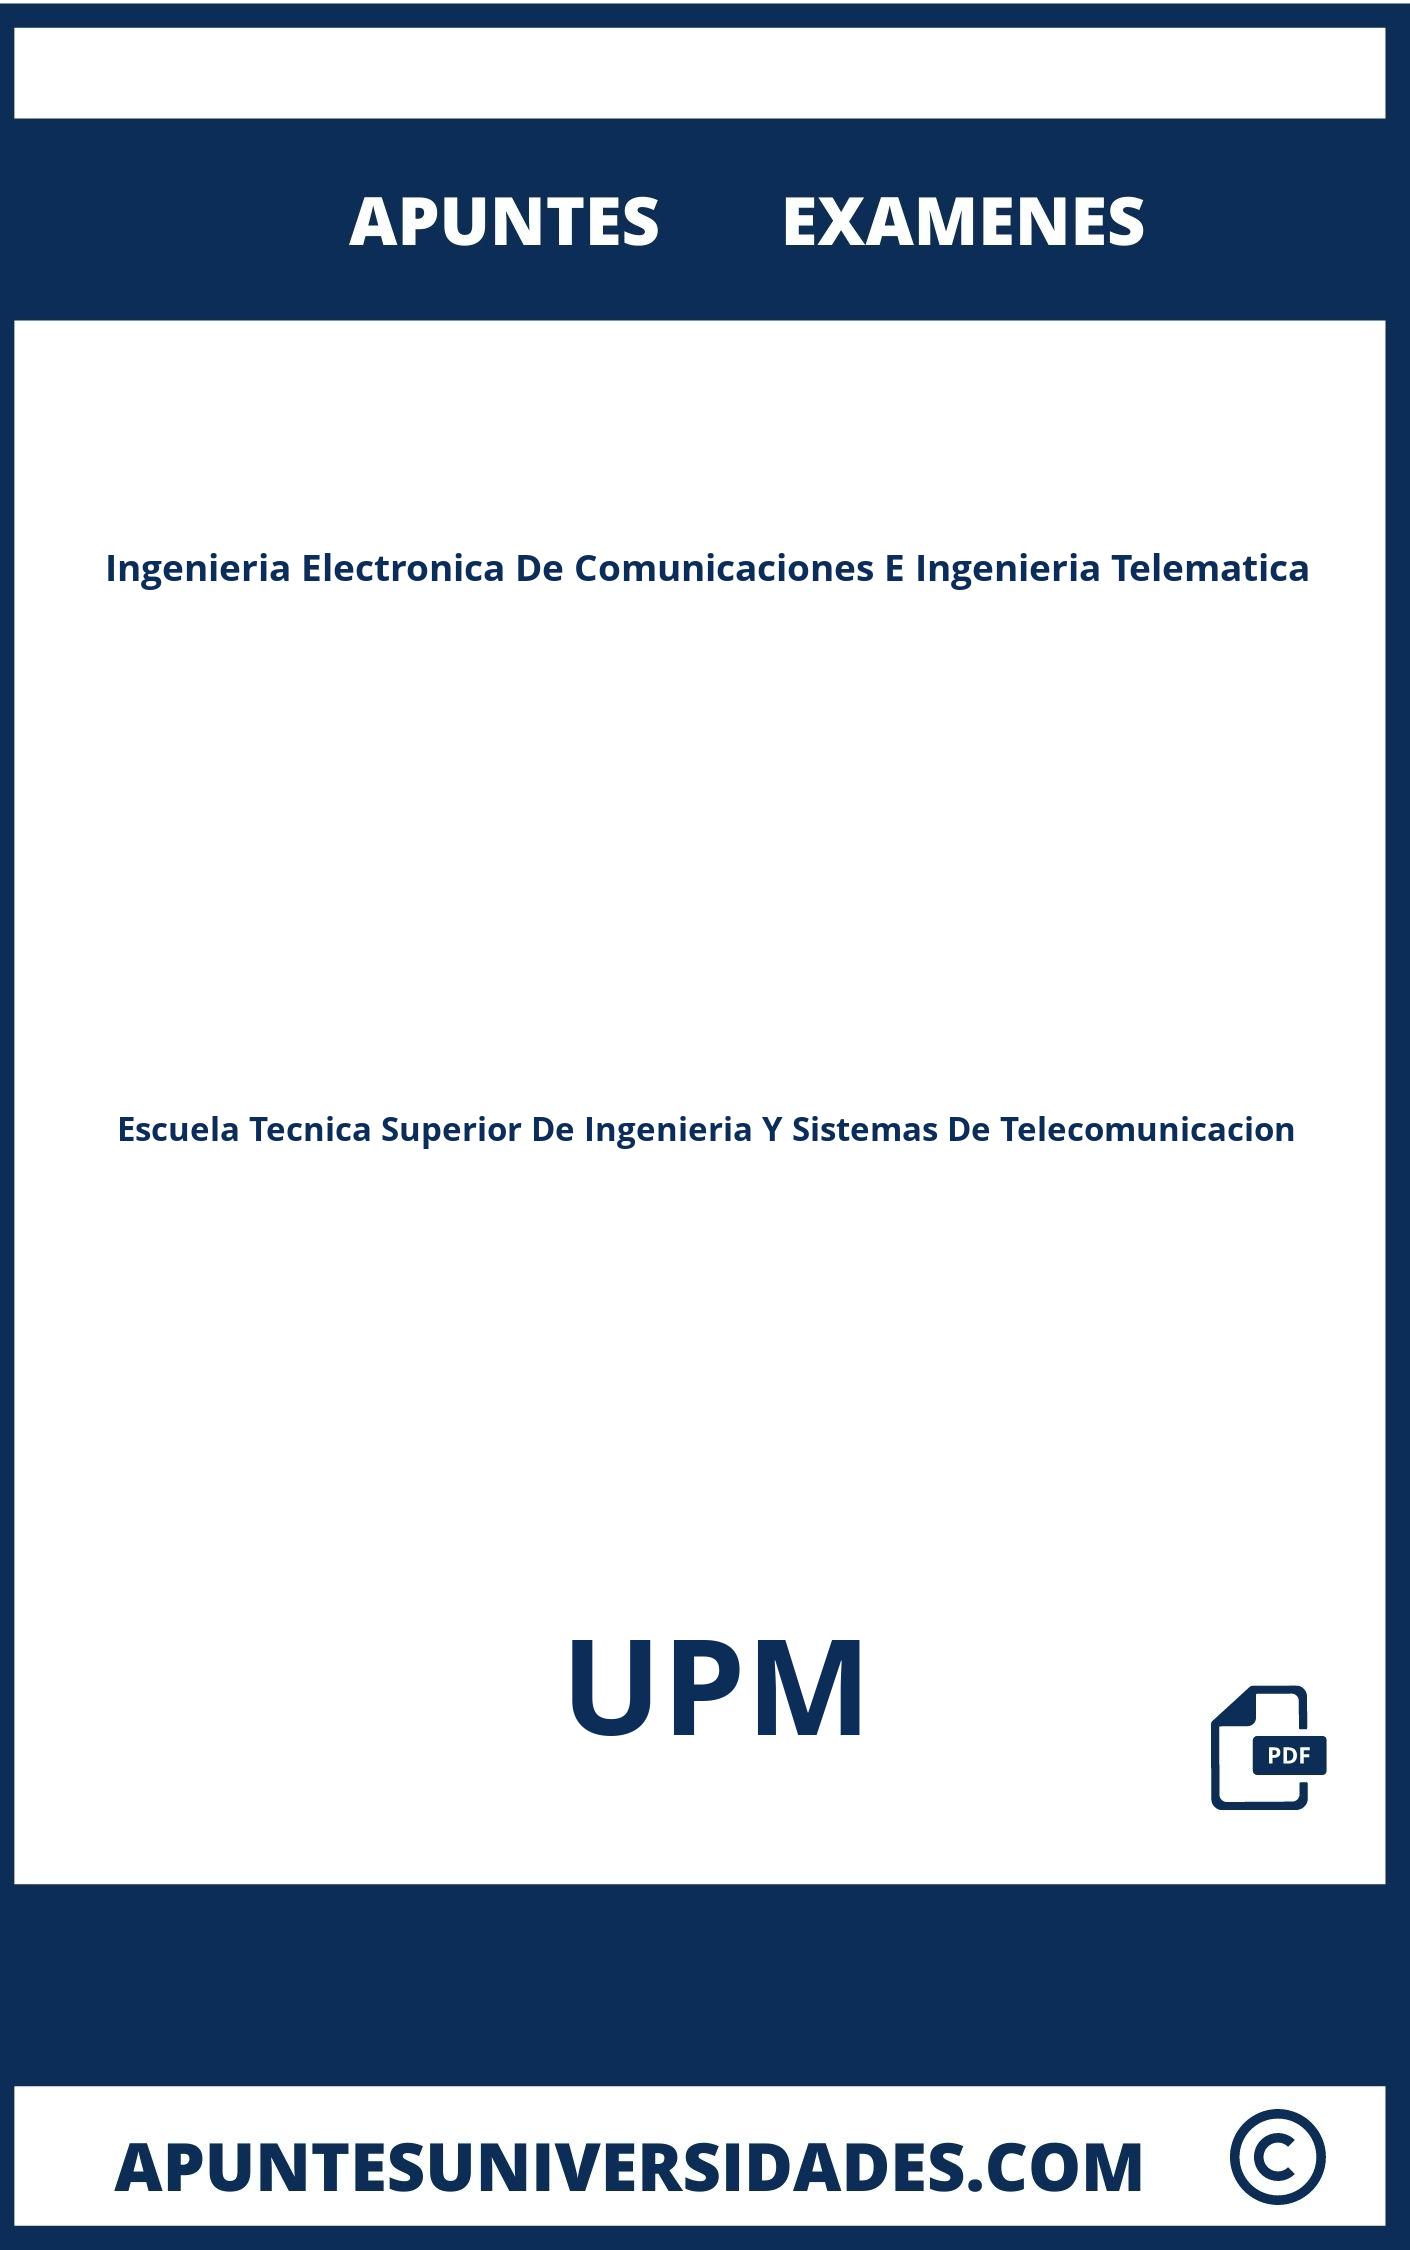 Ingenieria Electronica De Comunicaciones E Ingenieria Telematica UPM Examenes Apuntes